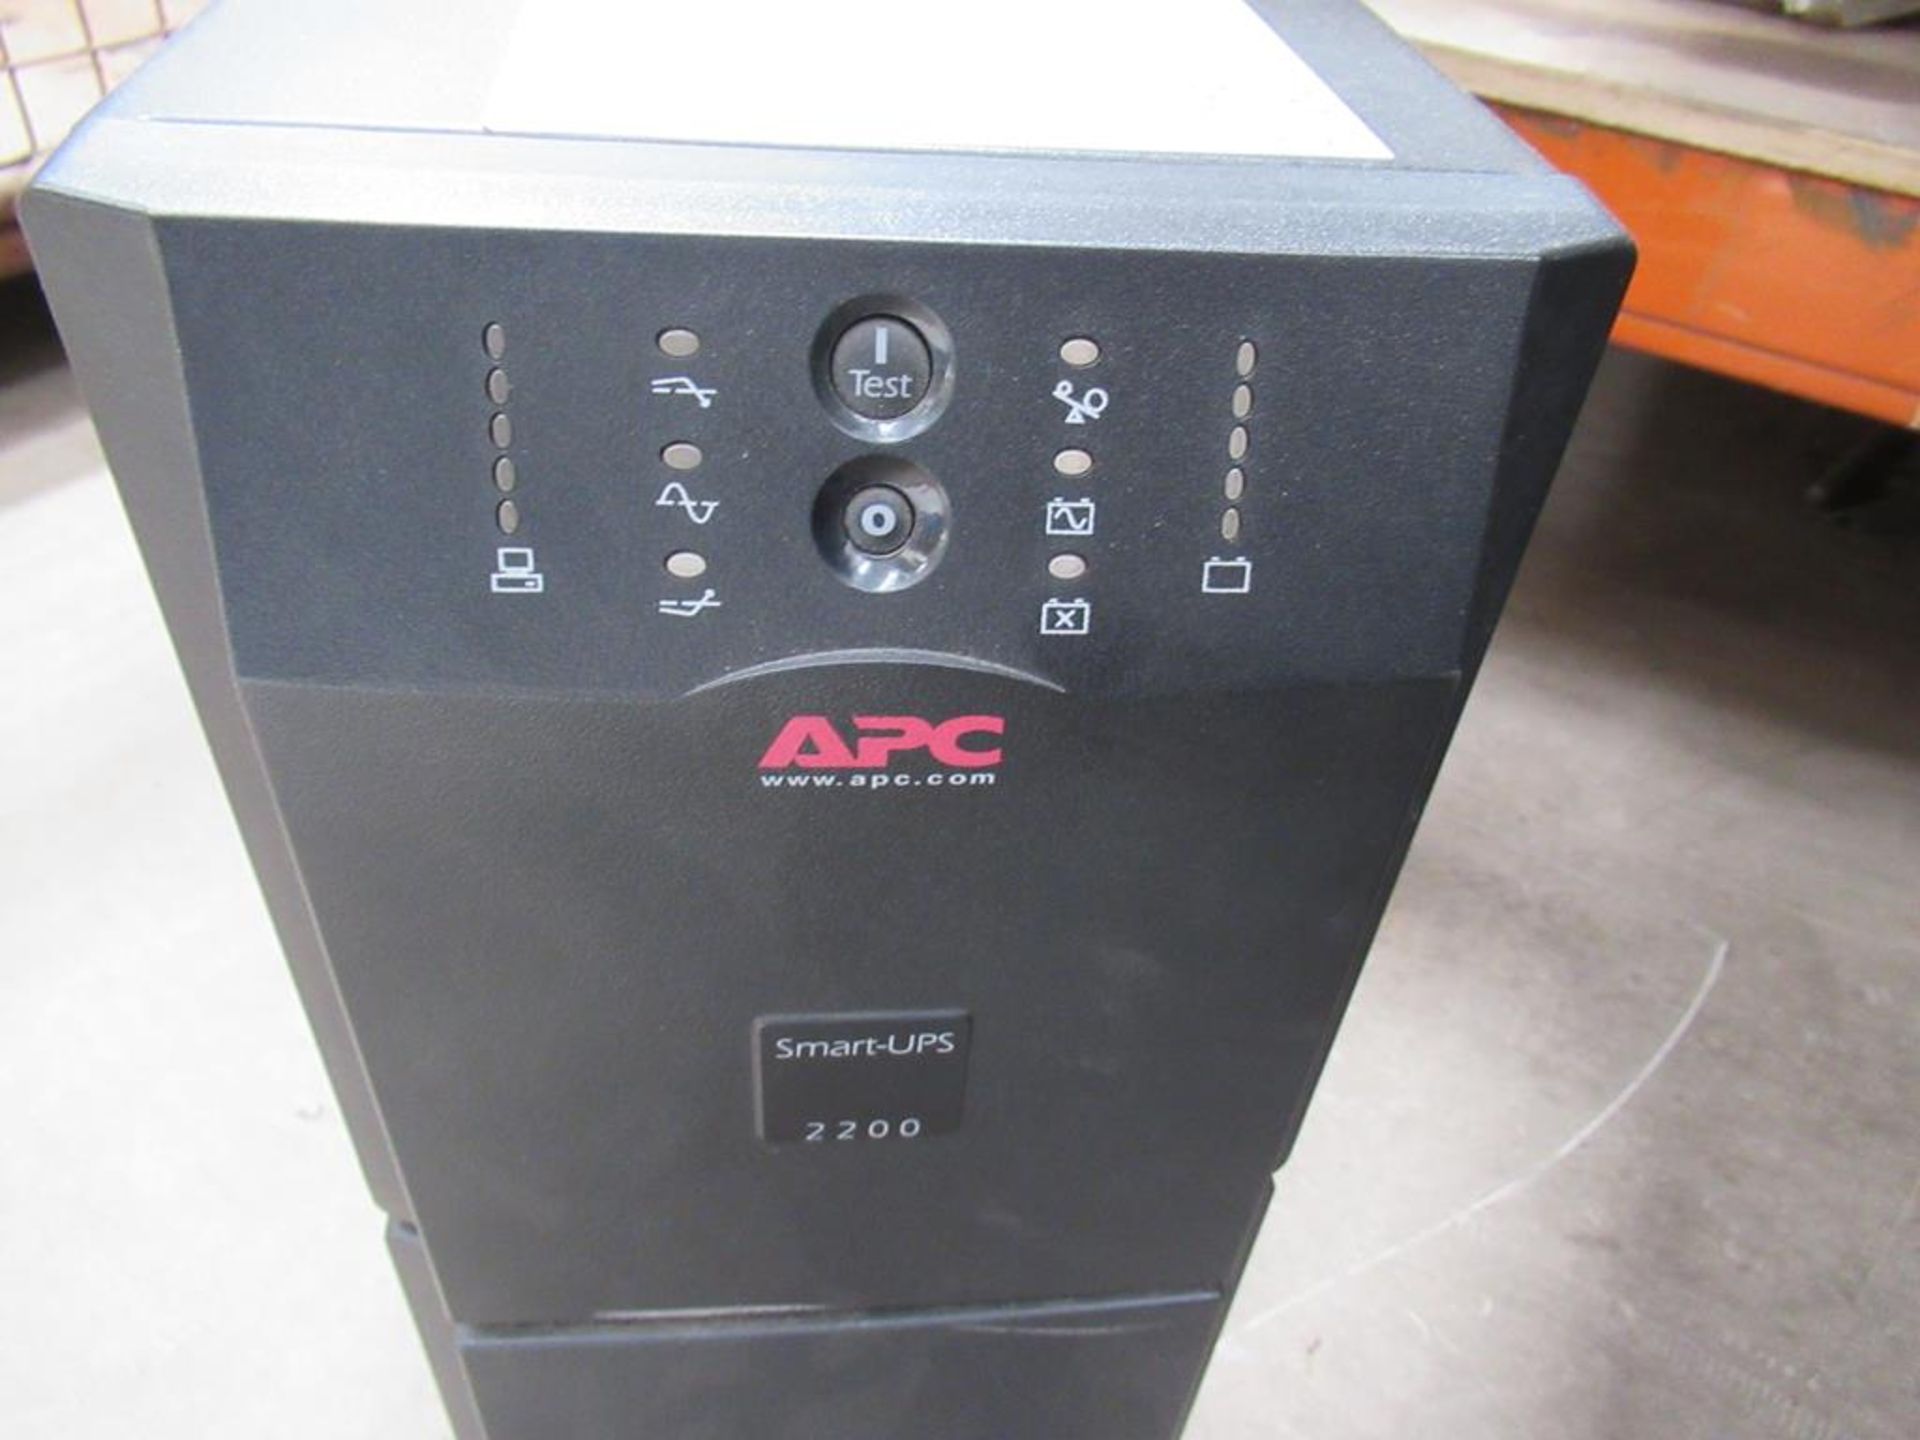 APC Smart-UPS 2200 Tower Power Supply - Image 2 of 3